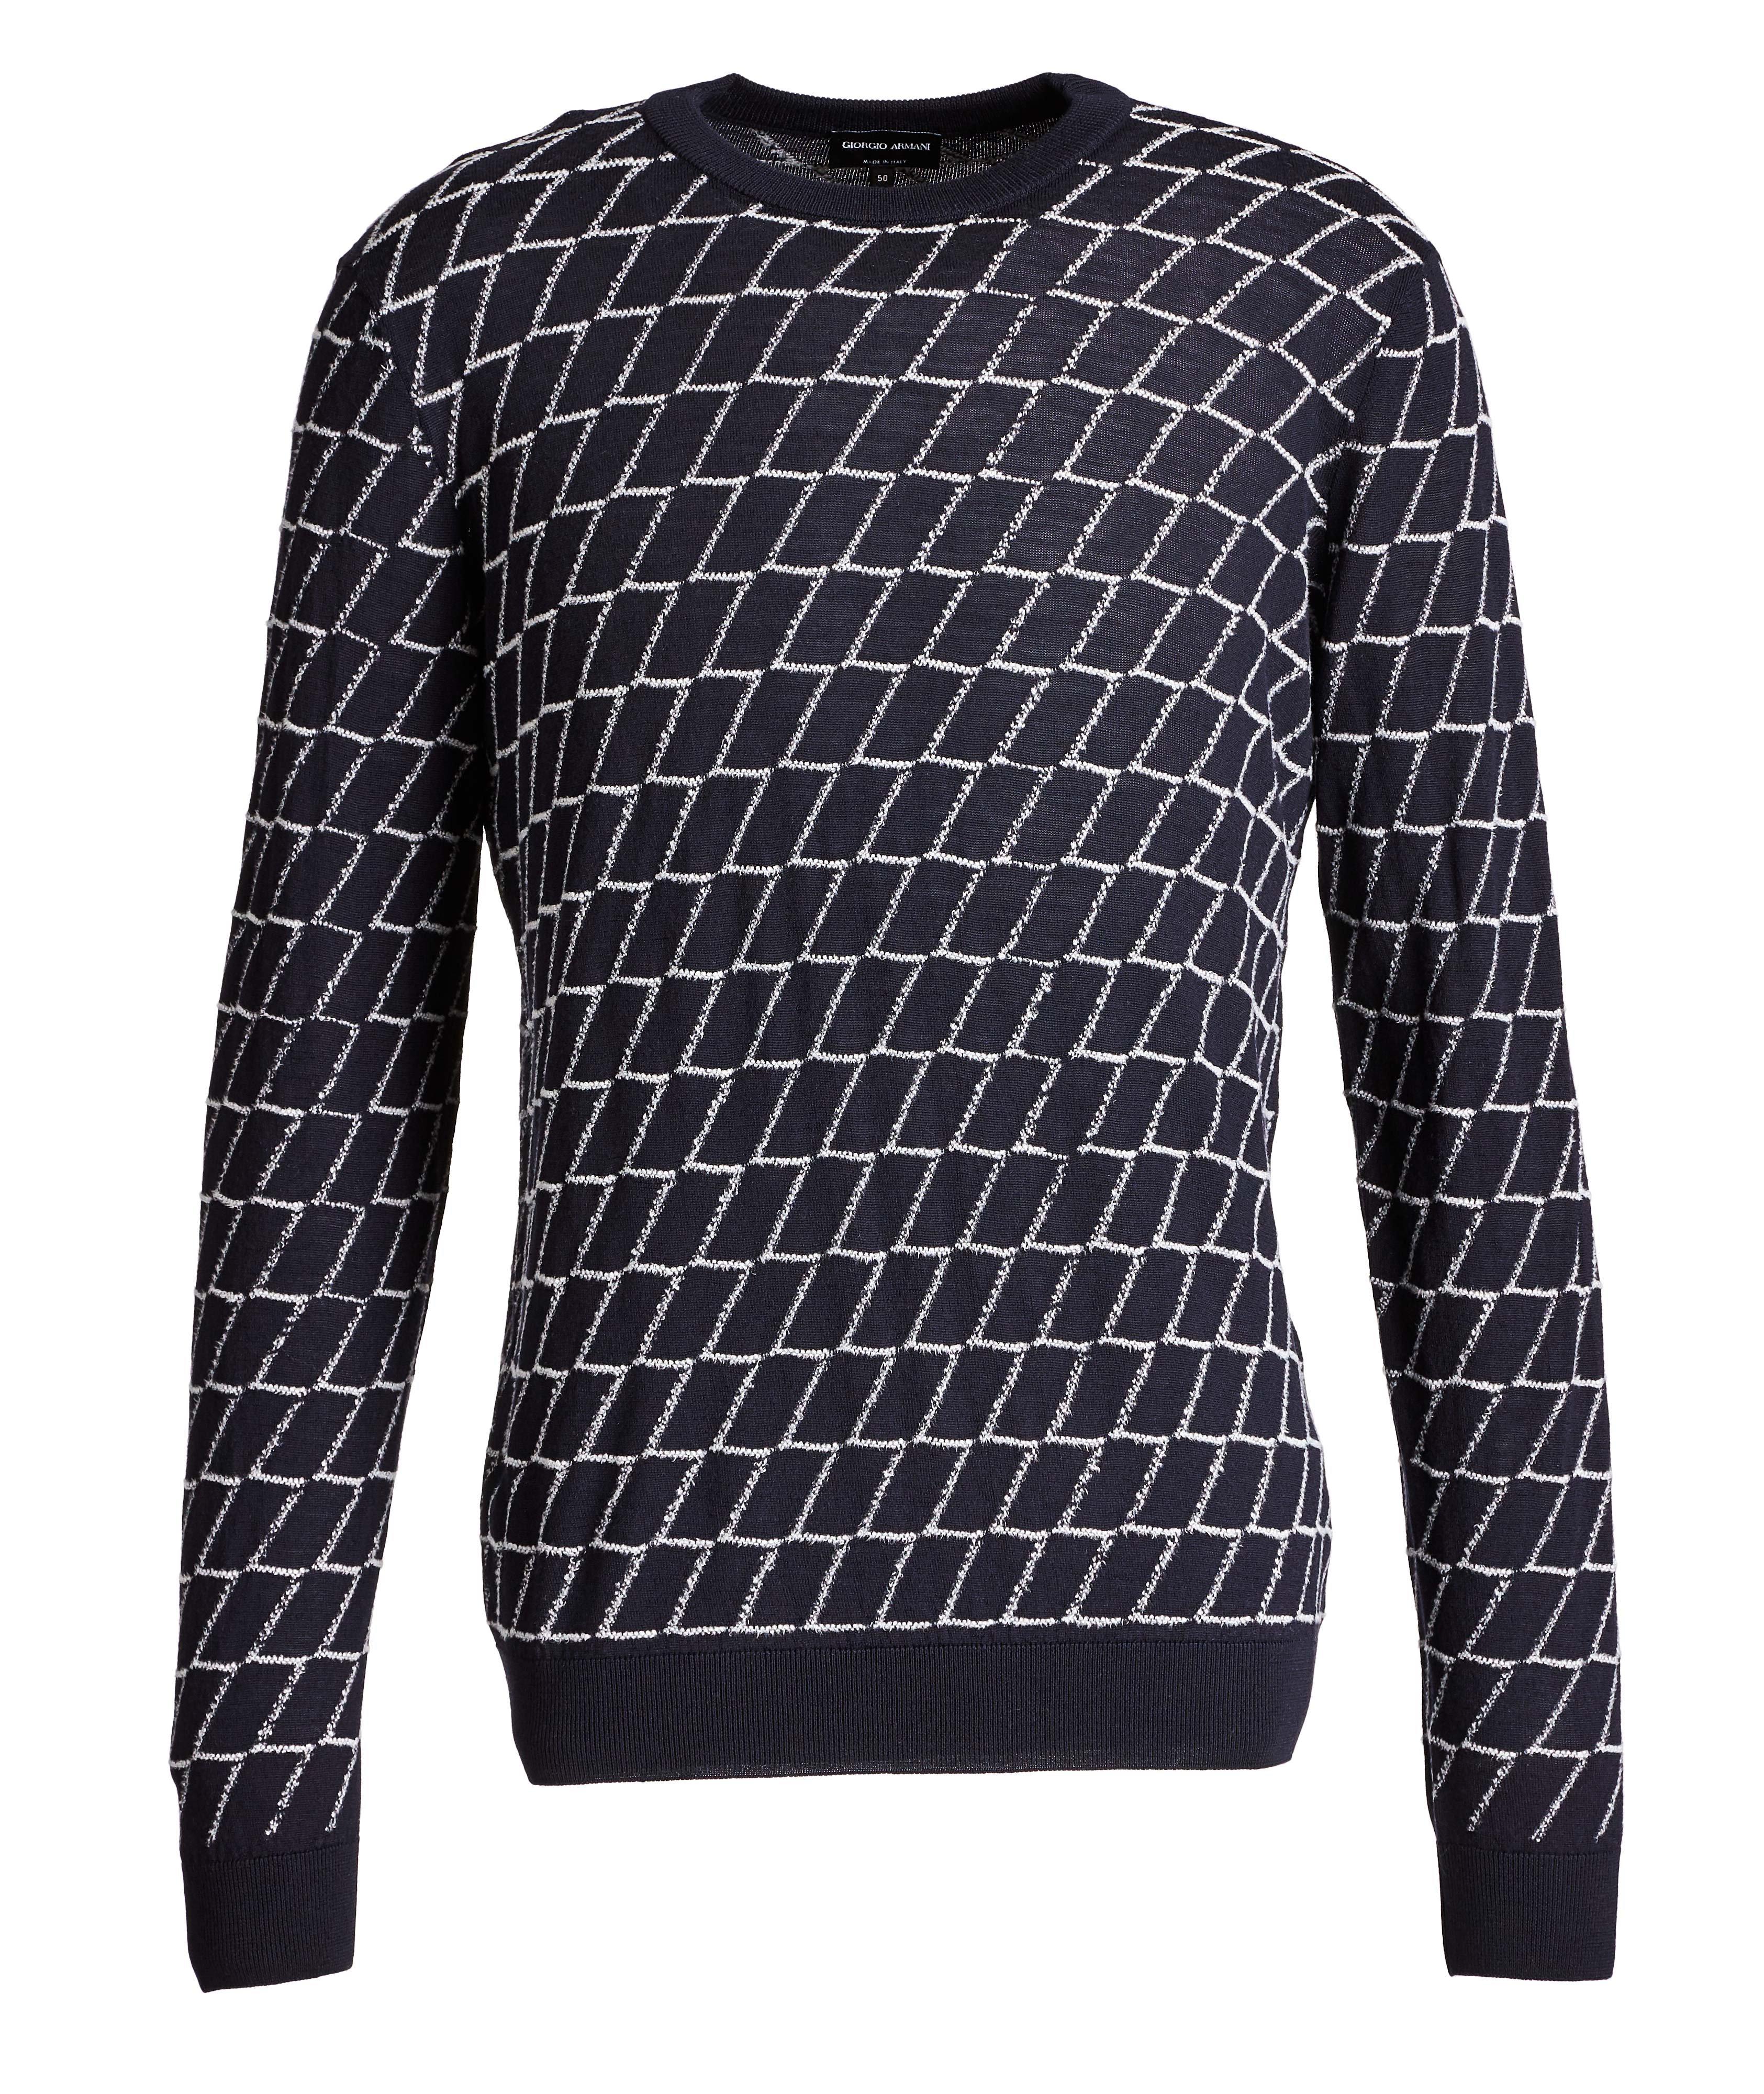 Textured Geometric Print Sweater image 0